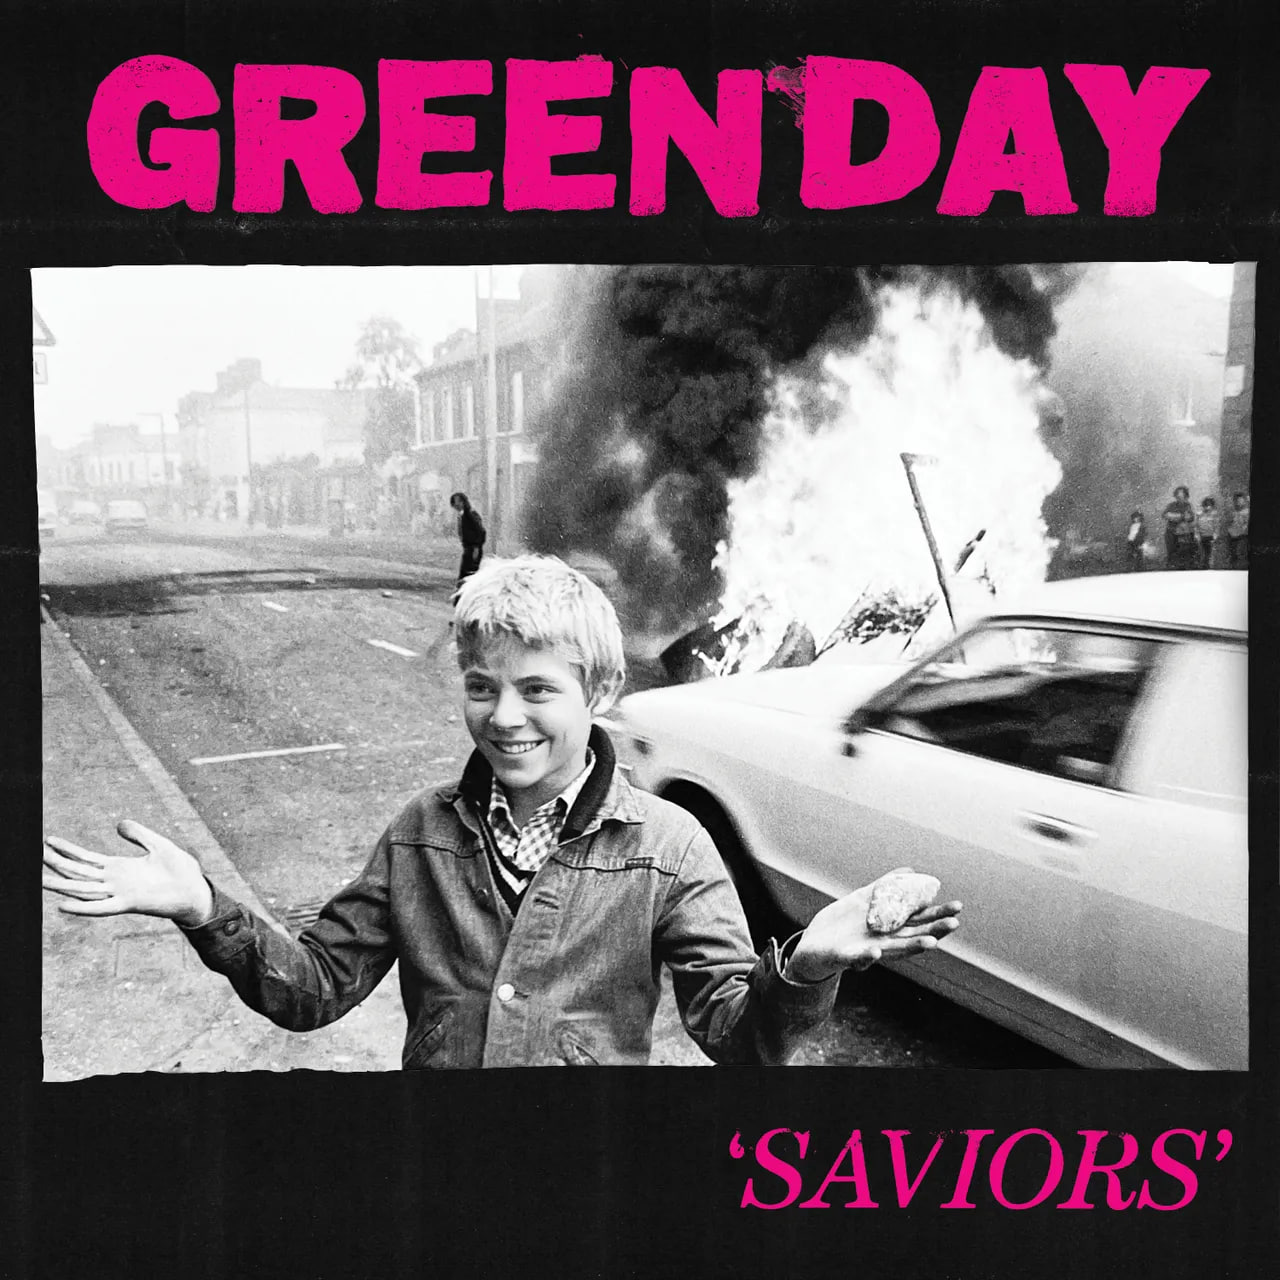 Рок Warner Music Green Day - Saviors (Limited Edition Magenta & Black Vinyl LP) панк bomba music король и шут акустический альбом limited forest green vinyl lp